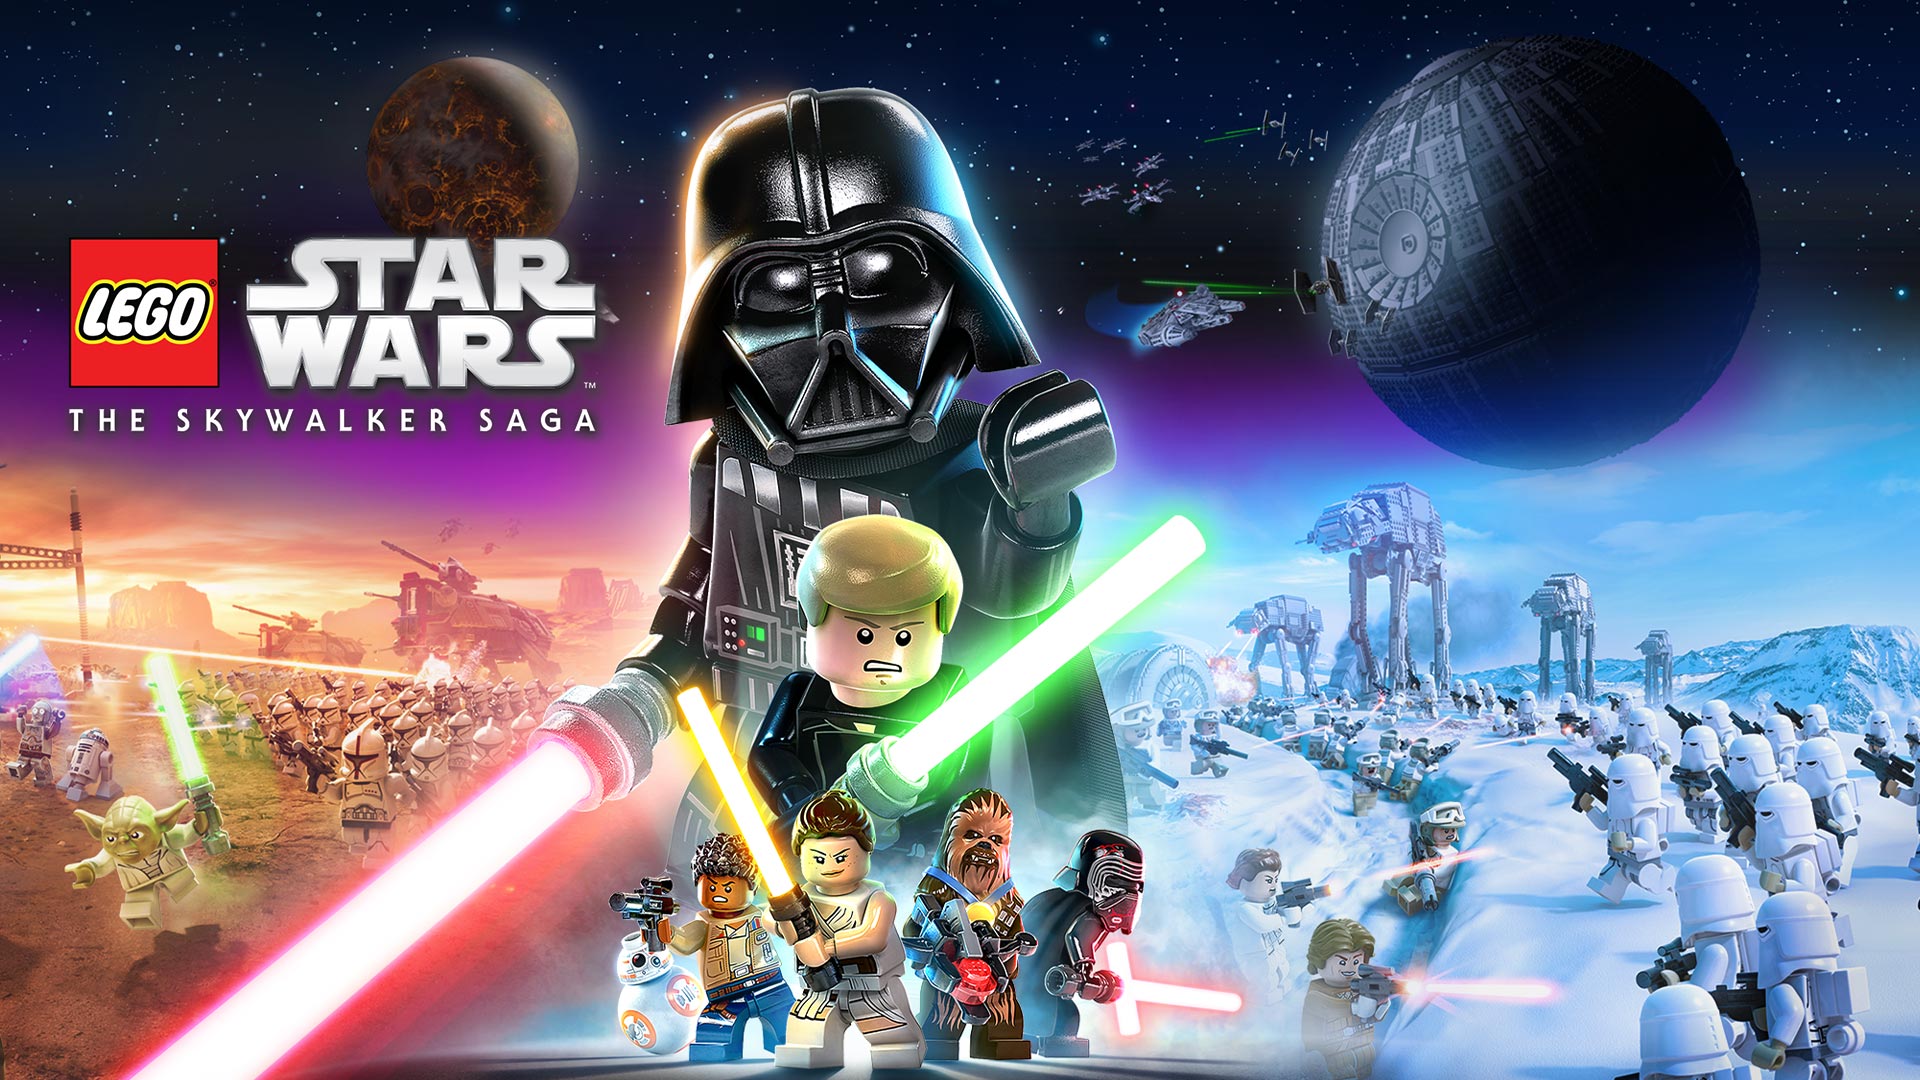 lego star wars xbox one complete saga